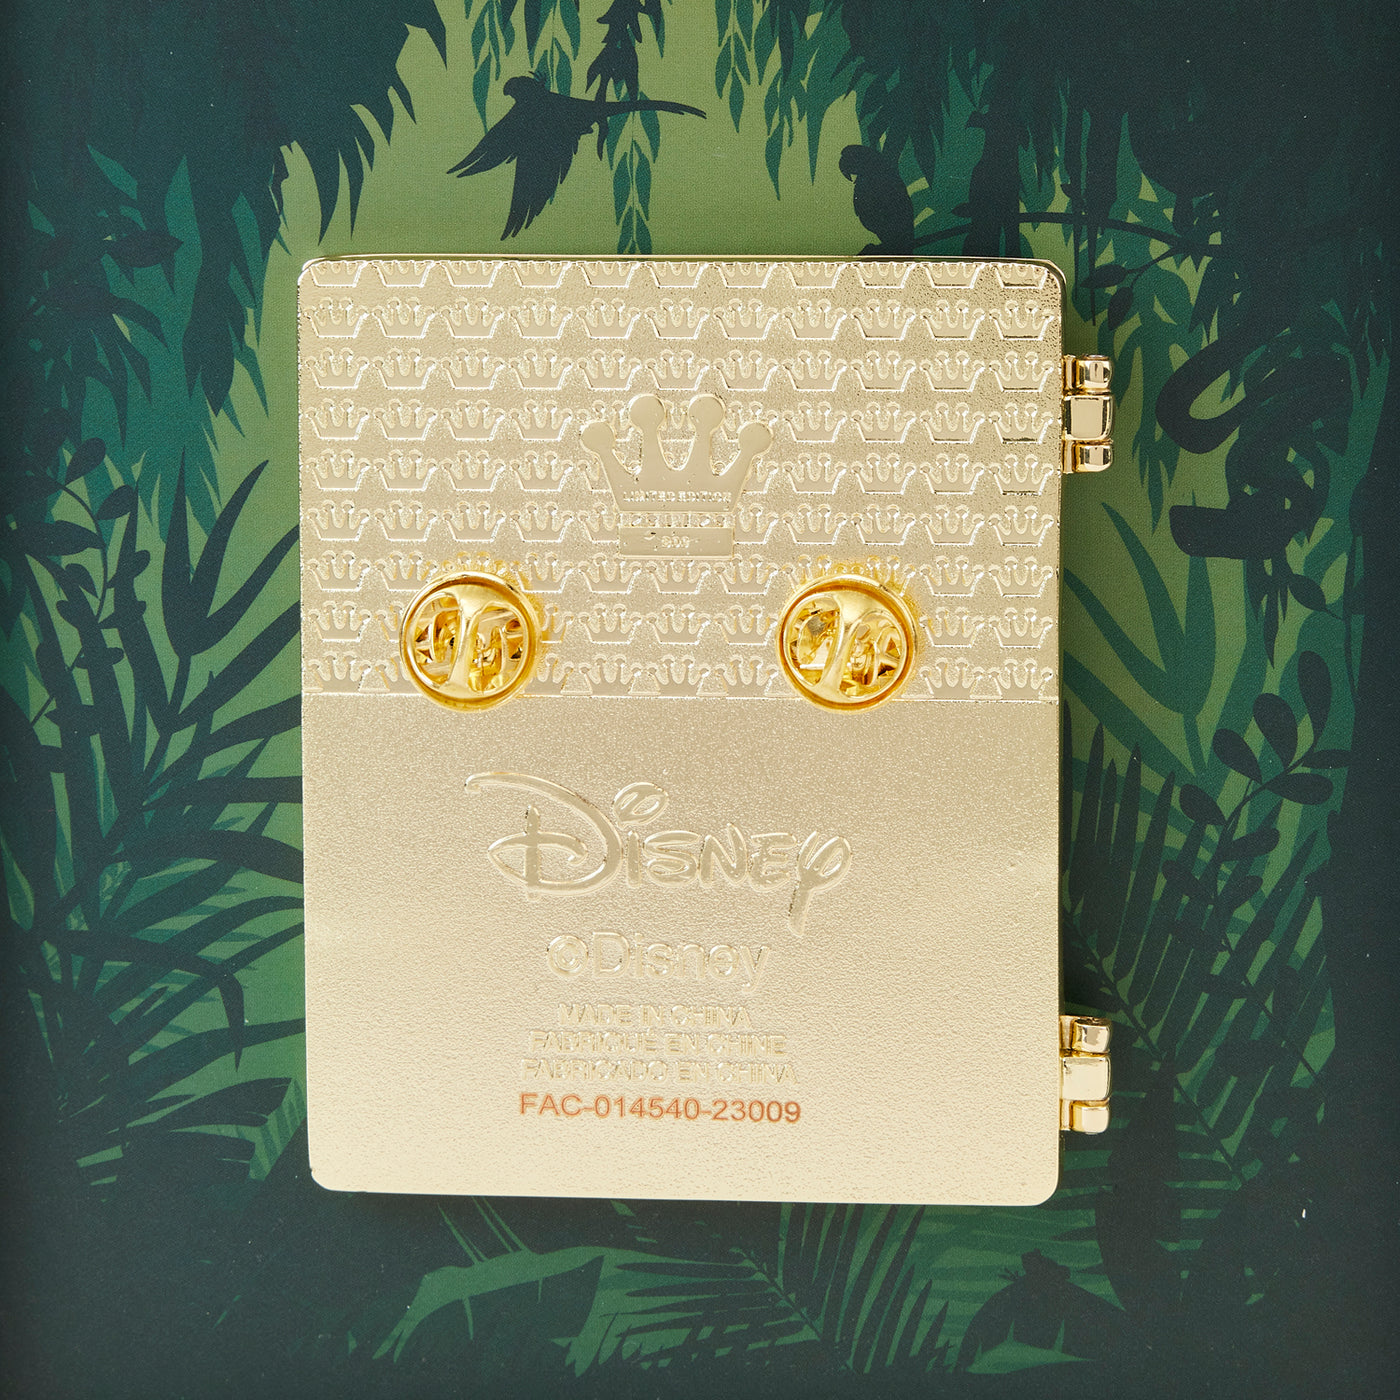 Disney Jungle Book Classic Book 3" Collector's Box Pin Limited Edition